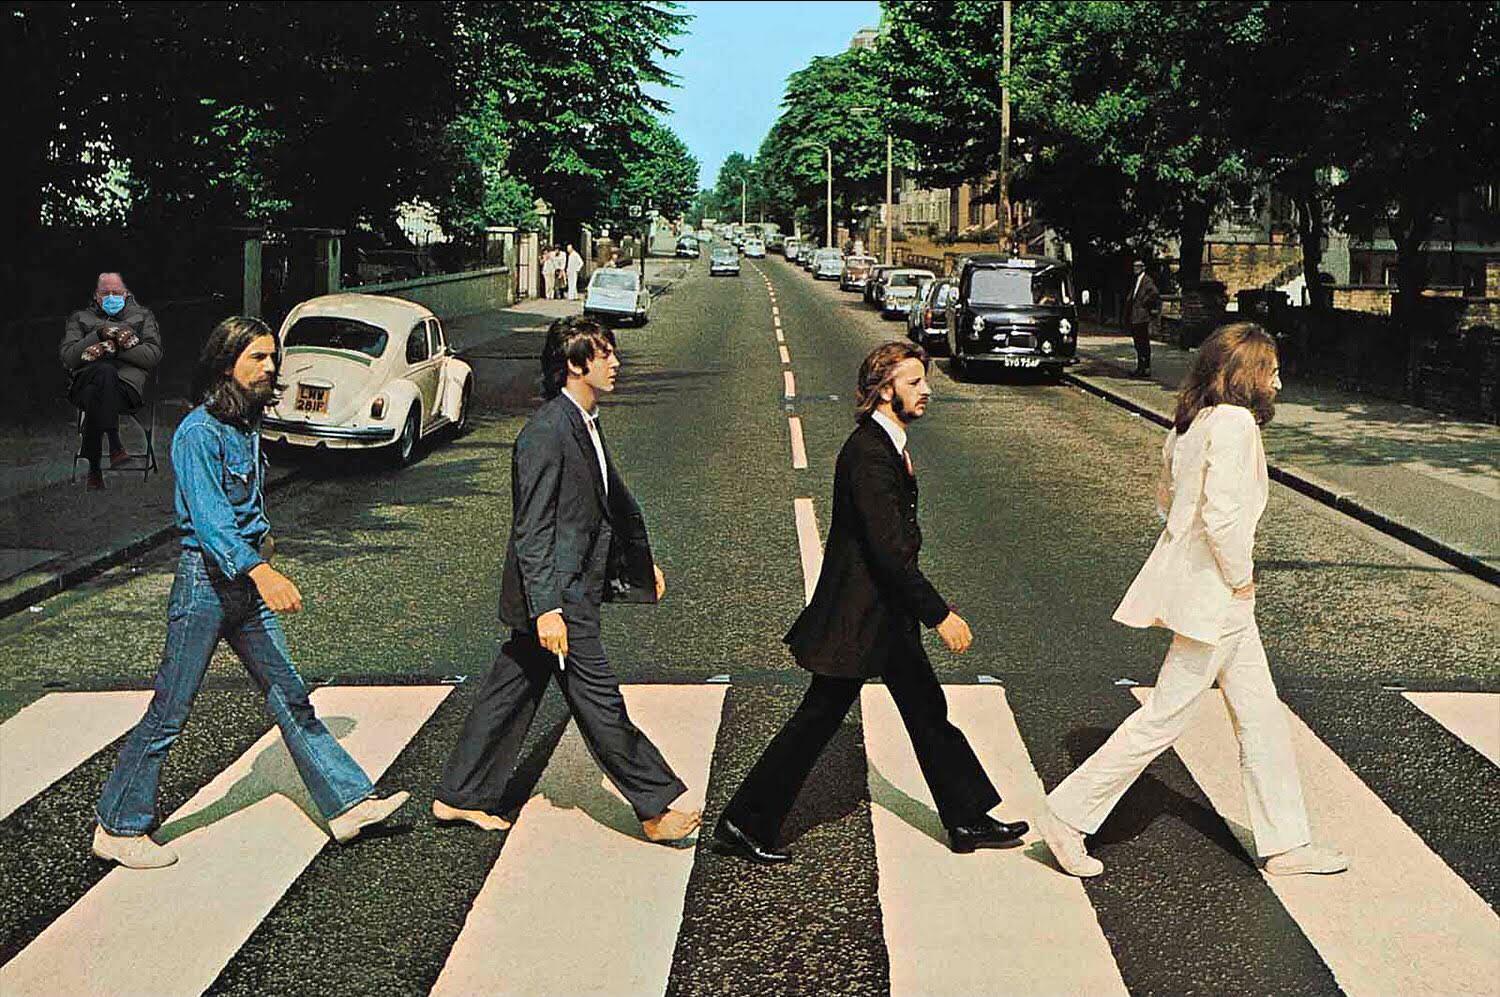 Bernie Sanders-memet på omslaget till Betales ”Abbey Road”.